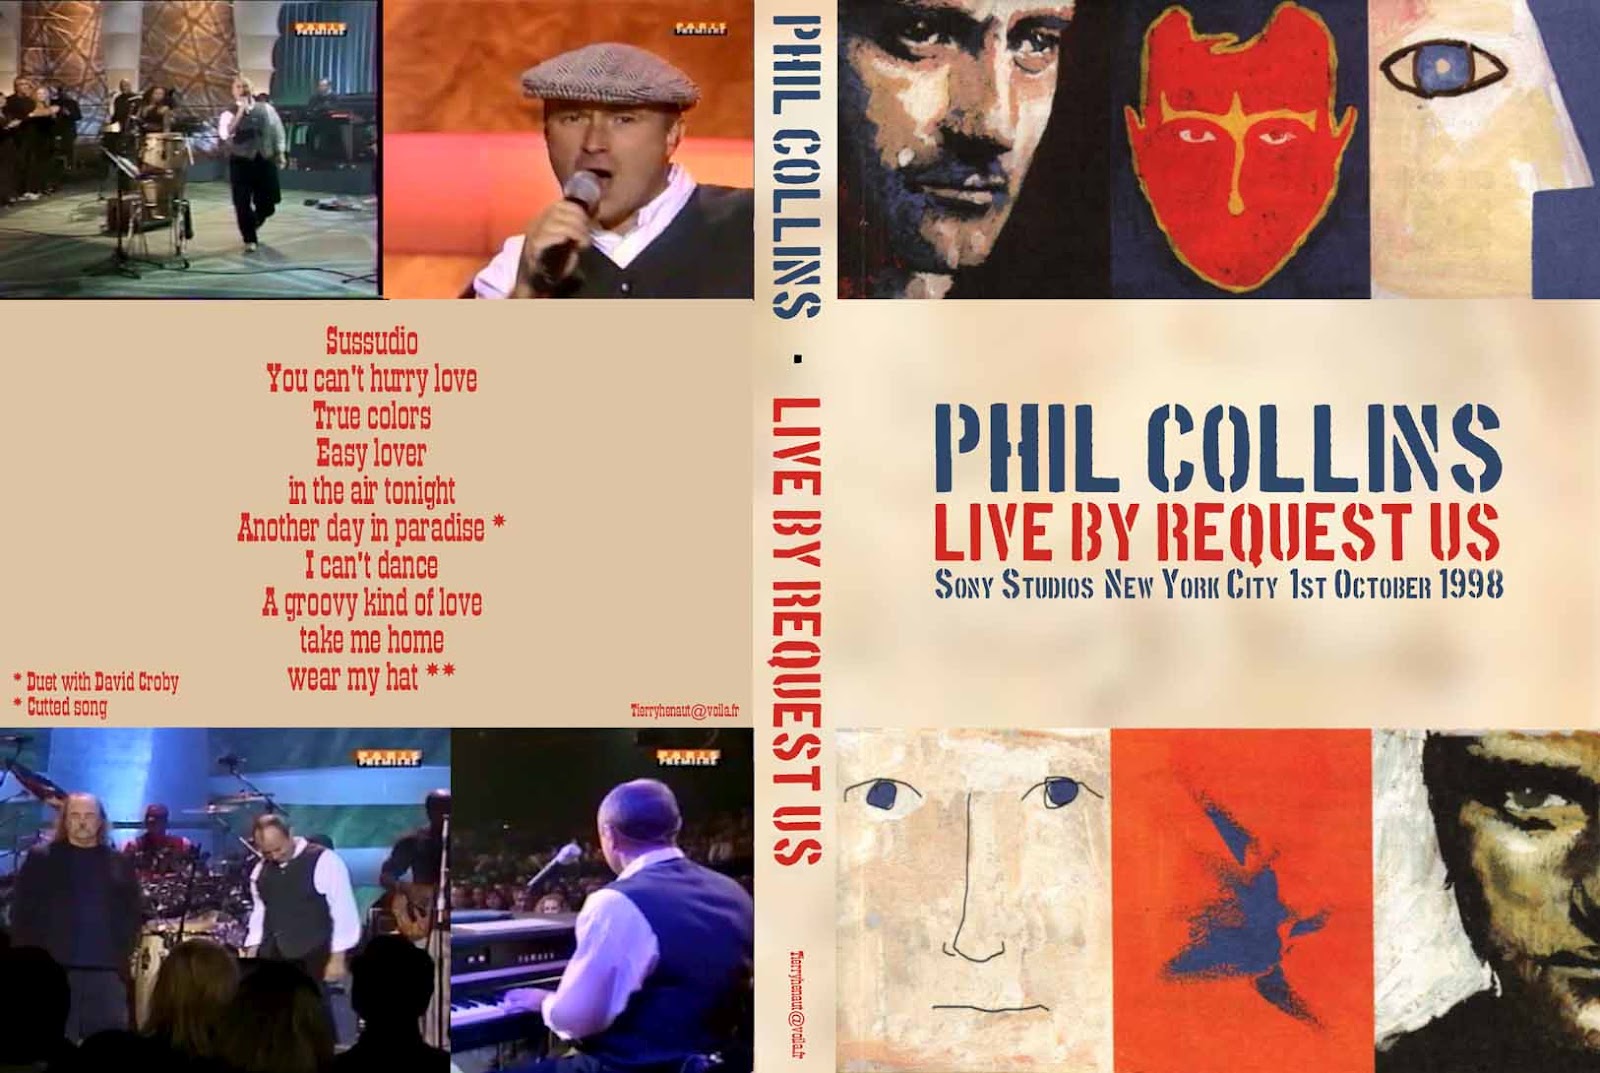 http://1.bp.blogspot.com/-cf3l7F3rYFY/T-k_GBC4waI/AAAAAAAAGds/pAncevxnUw0/s1600/DVD+Cover+-+Phil+Collins+-+Live+By+Request+1998.jpg